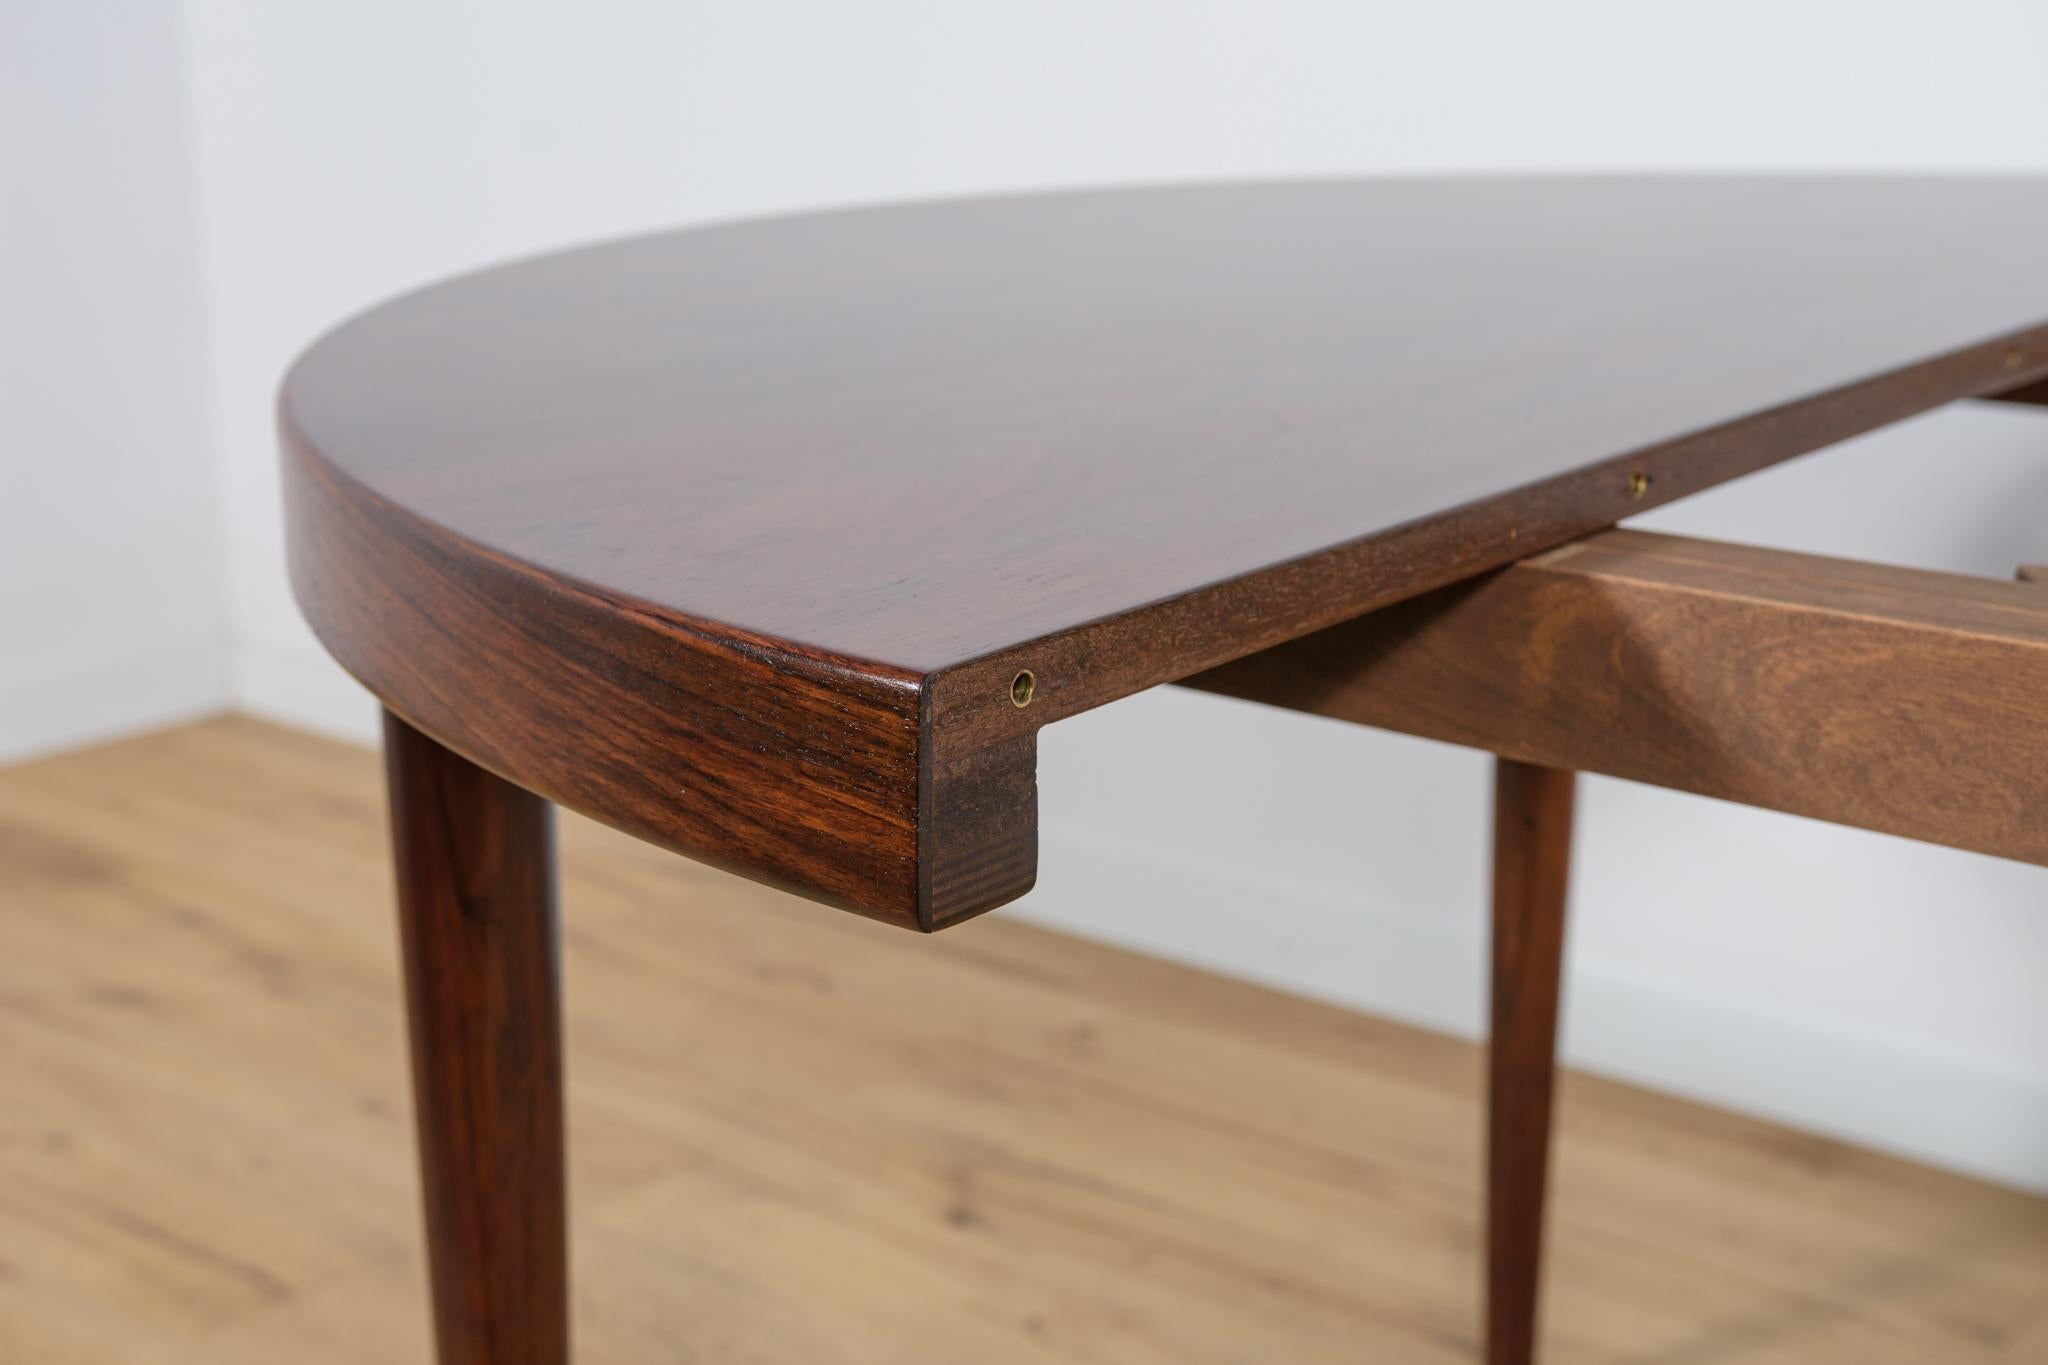  Mid-Century Extendable Rosewood Dining Table by Kai Kristiansen for Feldballes  For Sale 11